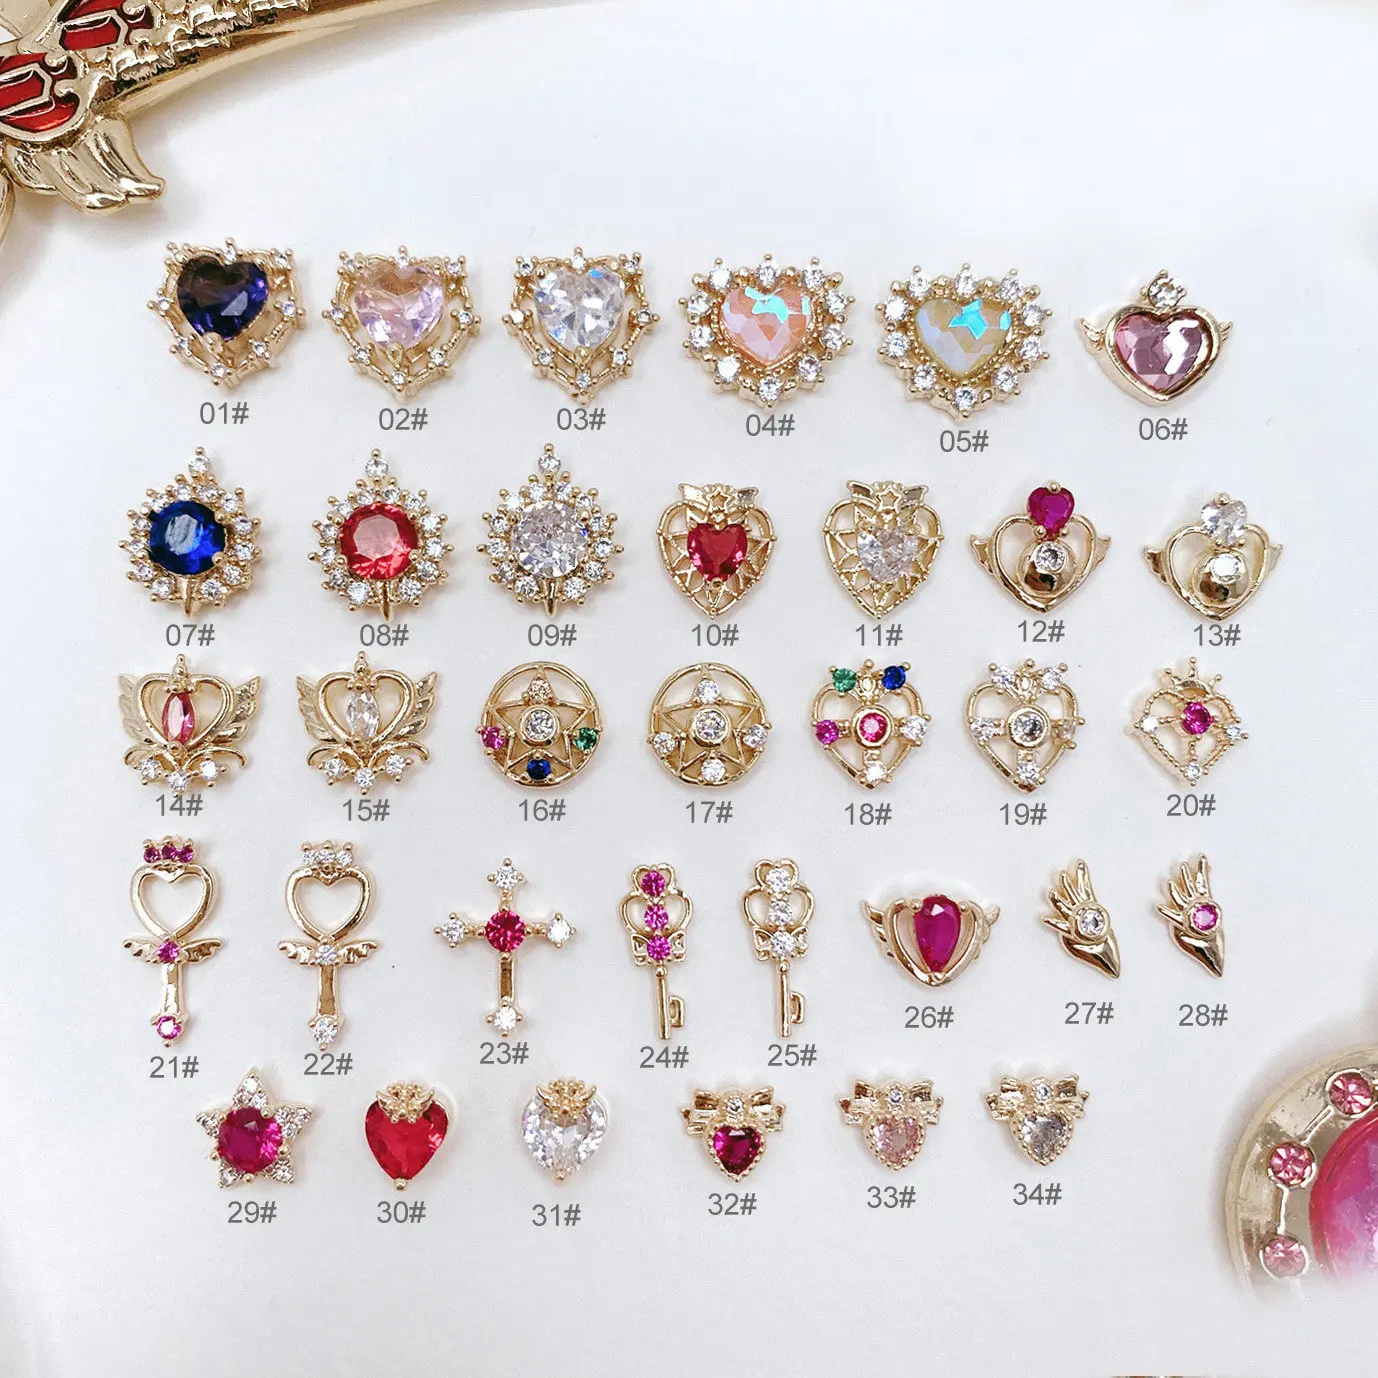 10pcs/lot Sailor Moon Heart Star Love Zircon Crystals Rhinestones Nail Art Jewelry Decorations Nails Accessories Charms Supplies